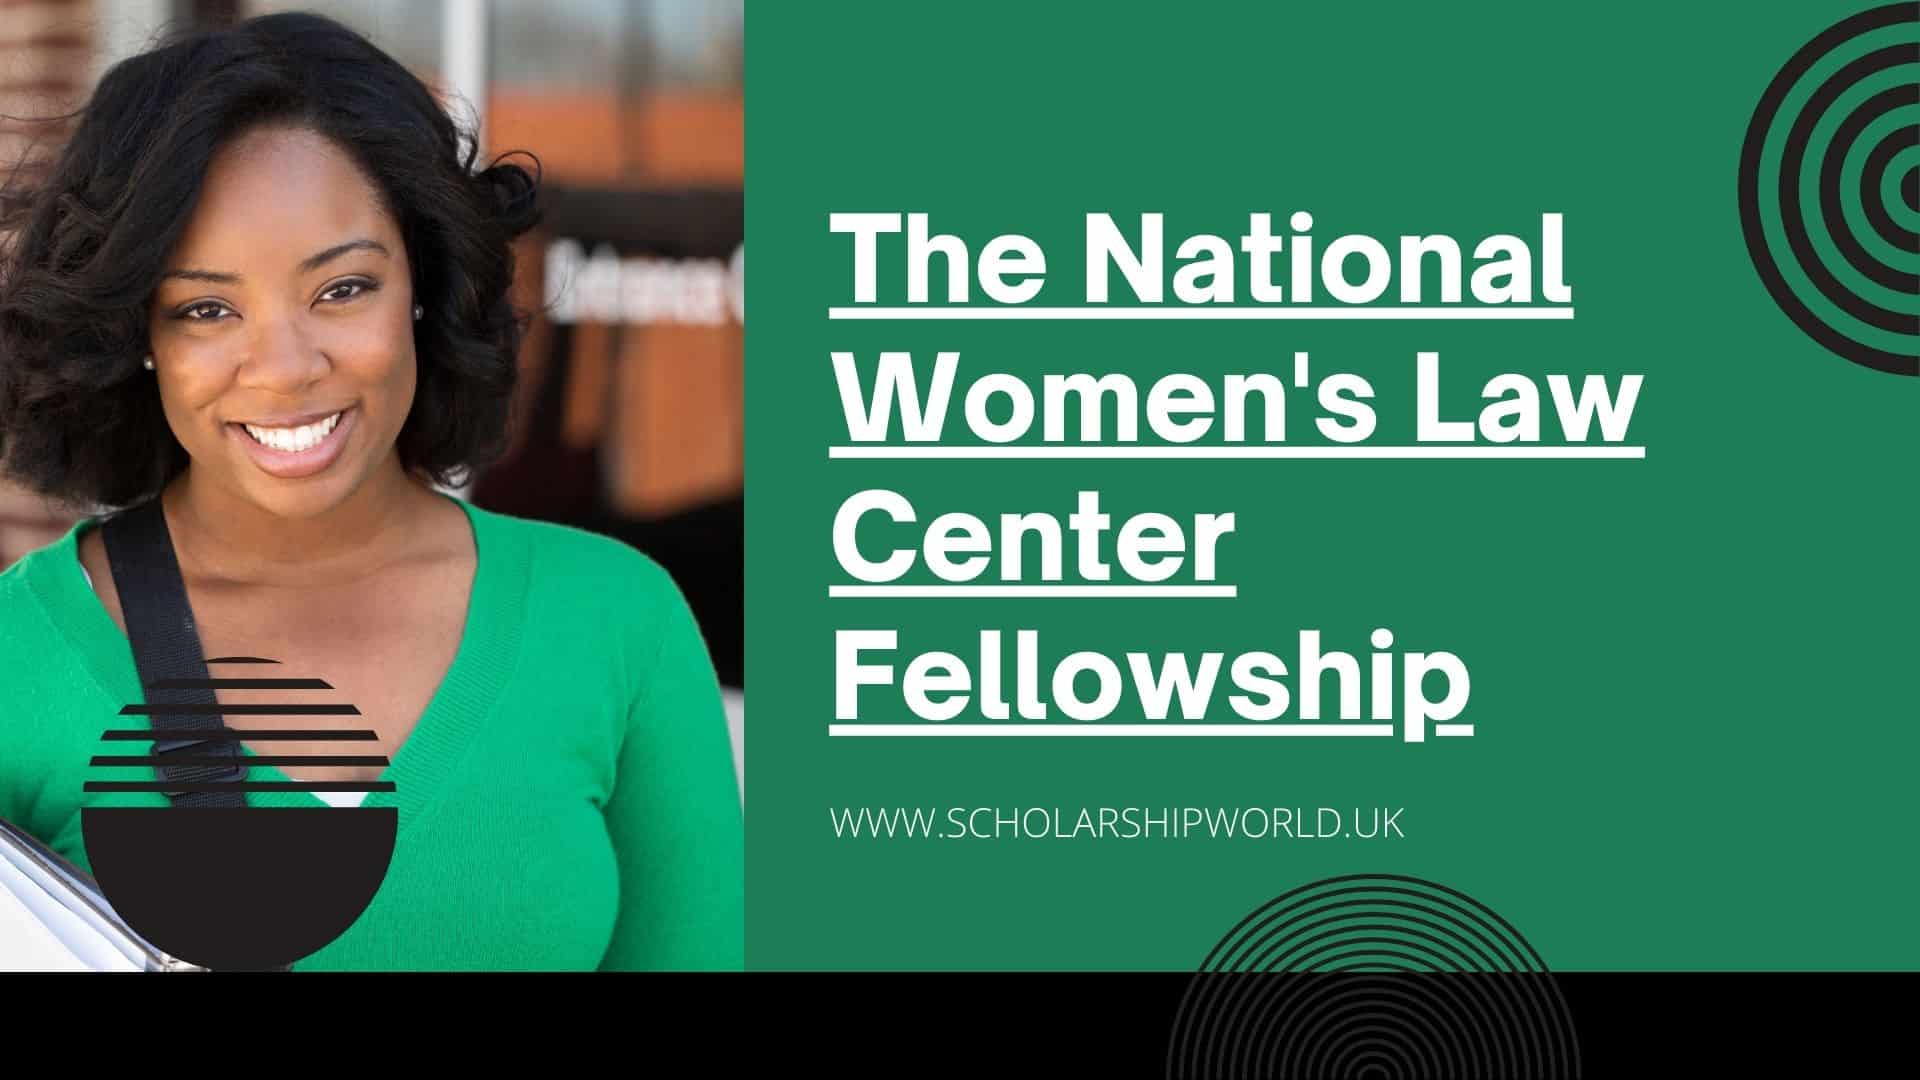 The National Women's Law Center Fellowship